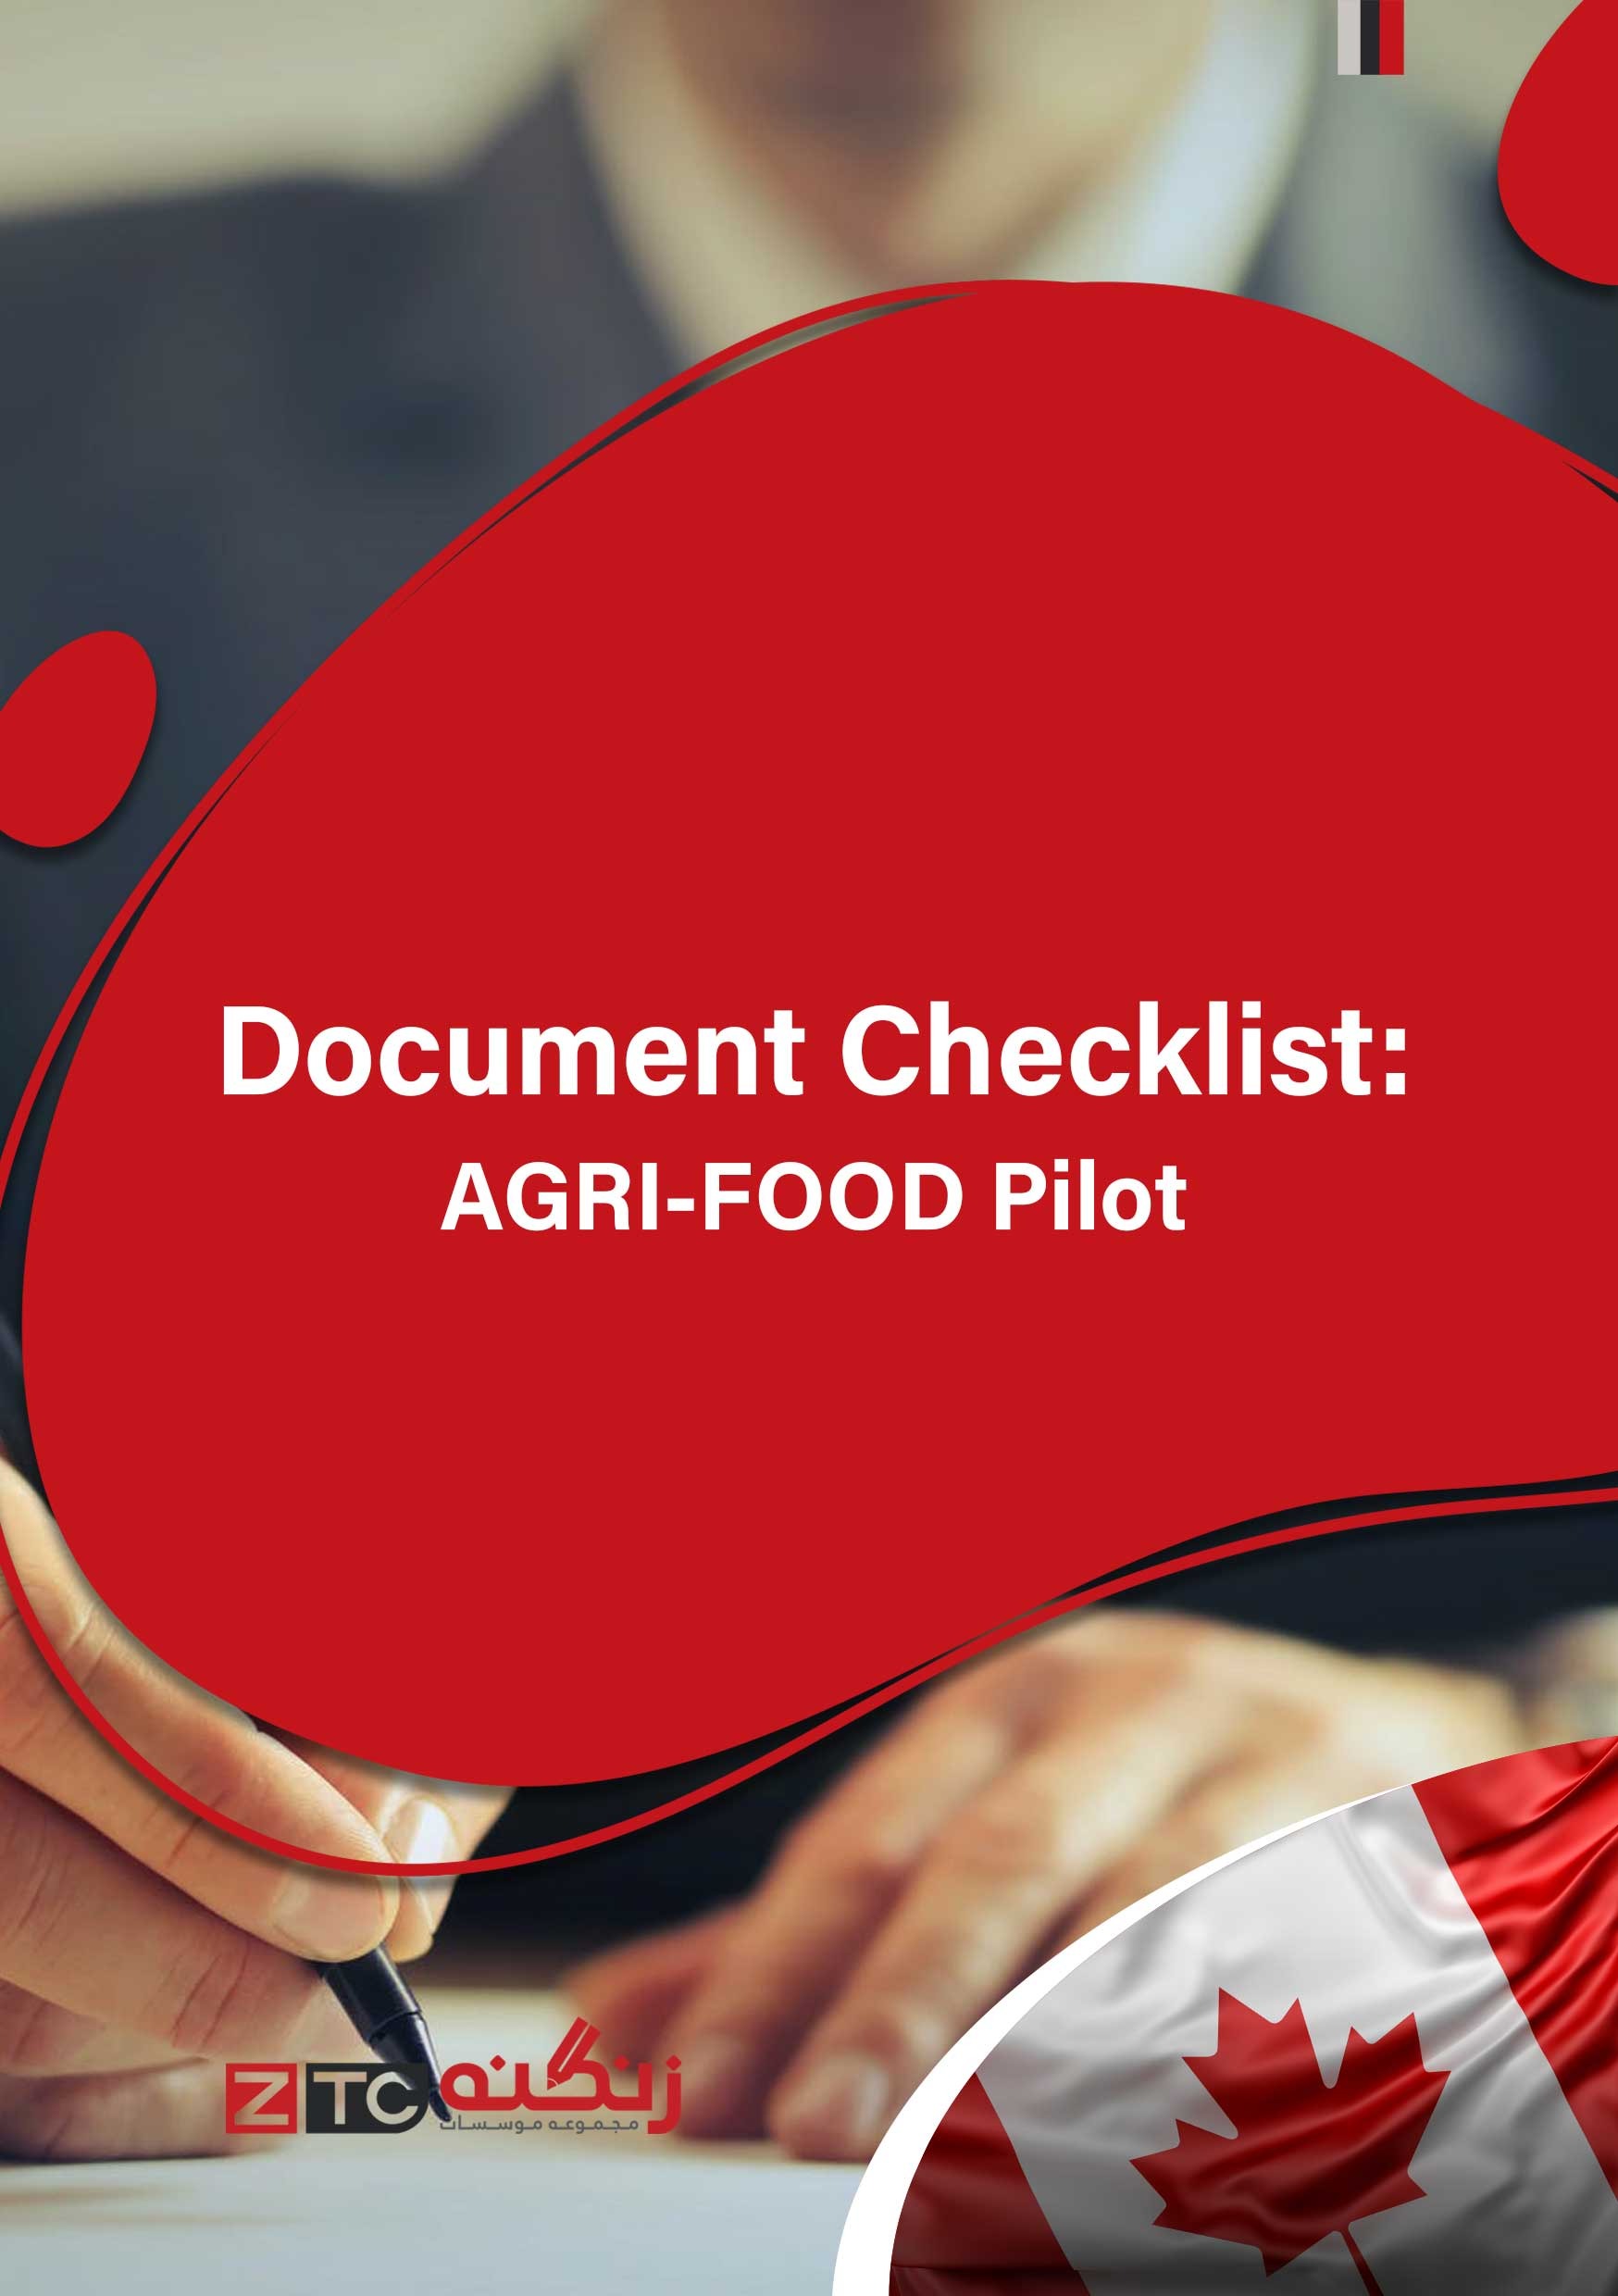 Document Checklist - AGRI-FOOD Pilot